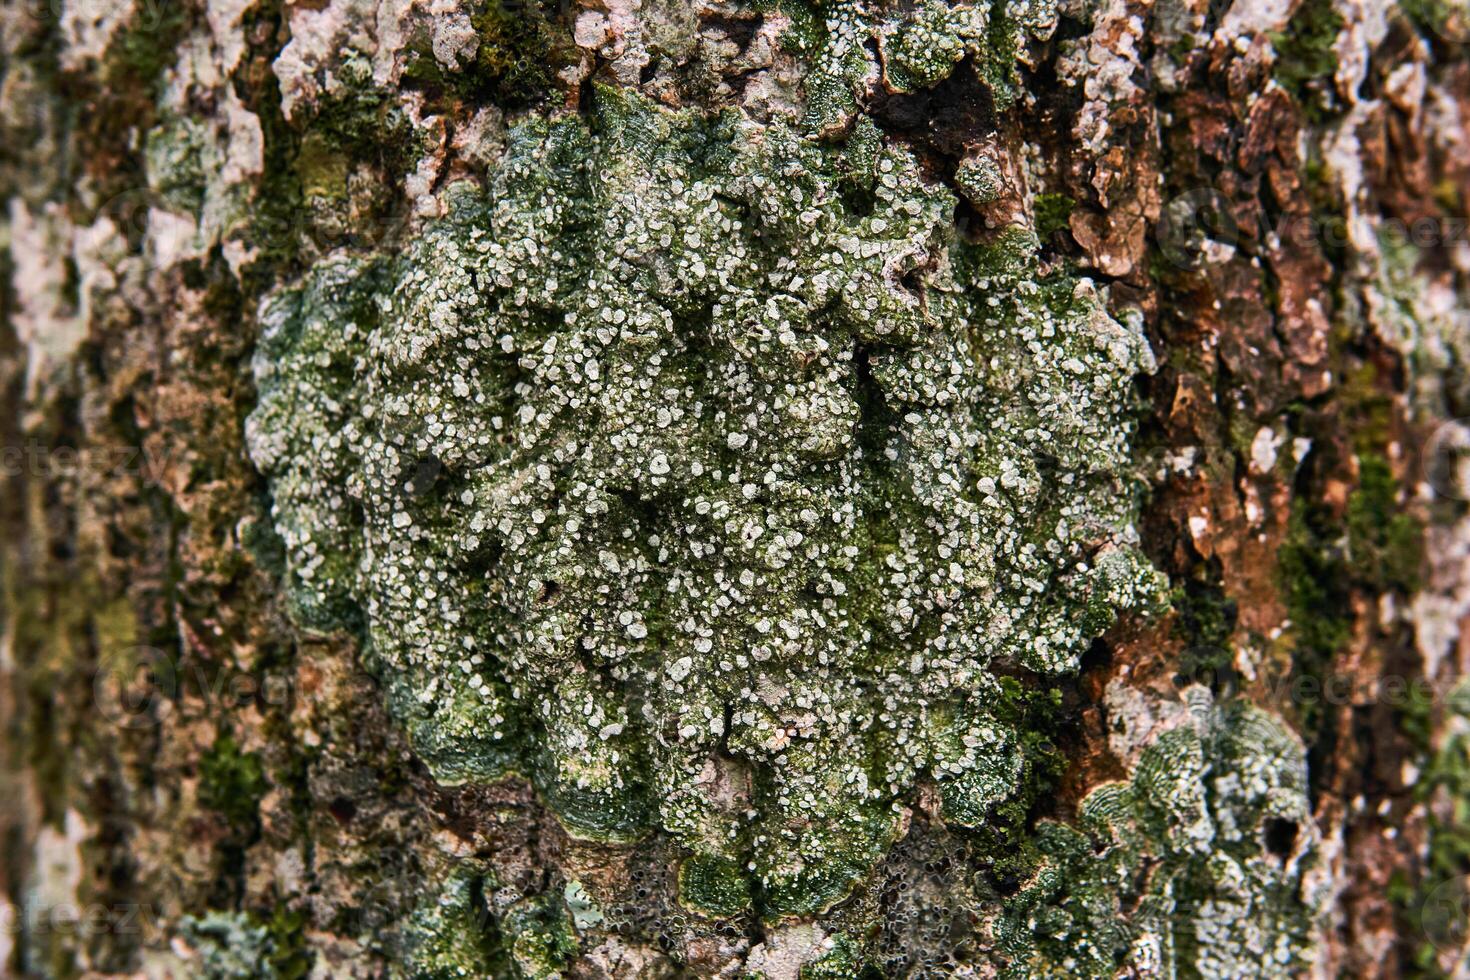 spore-bearing lichen on the tree bark close-up photo